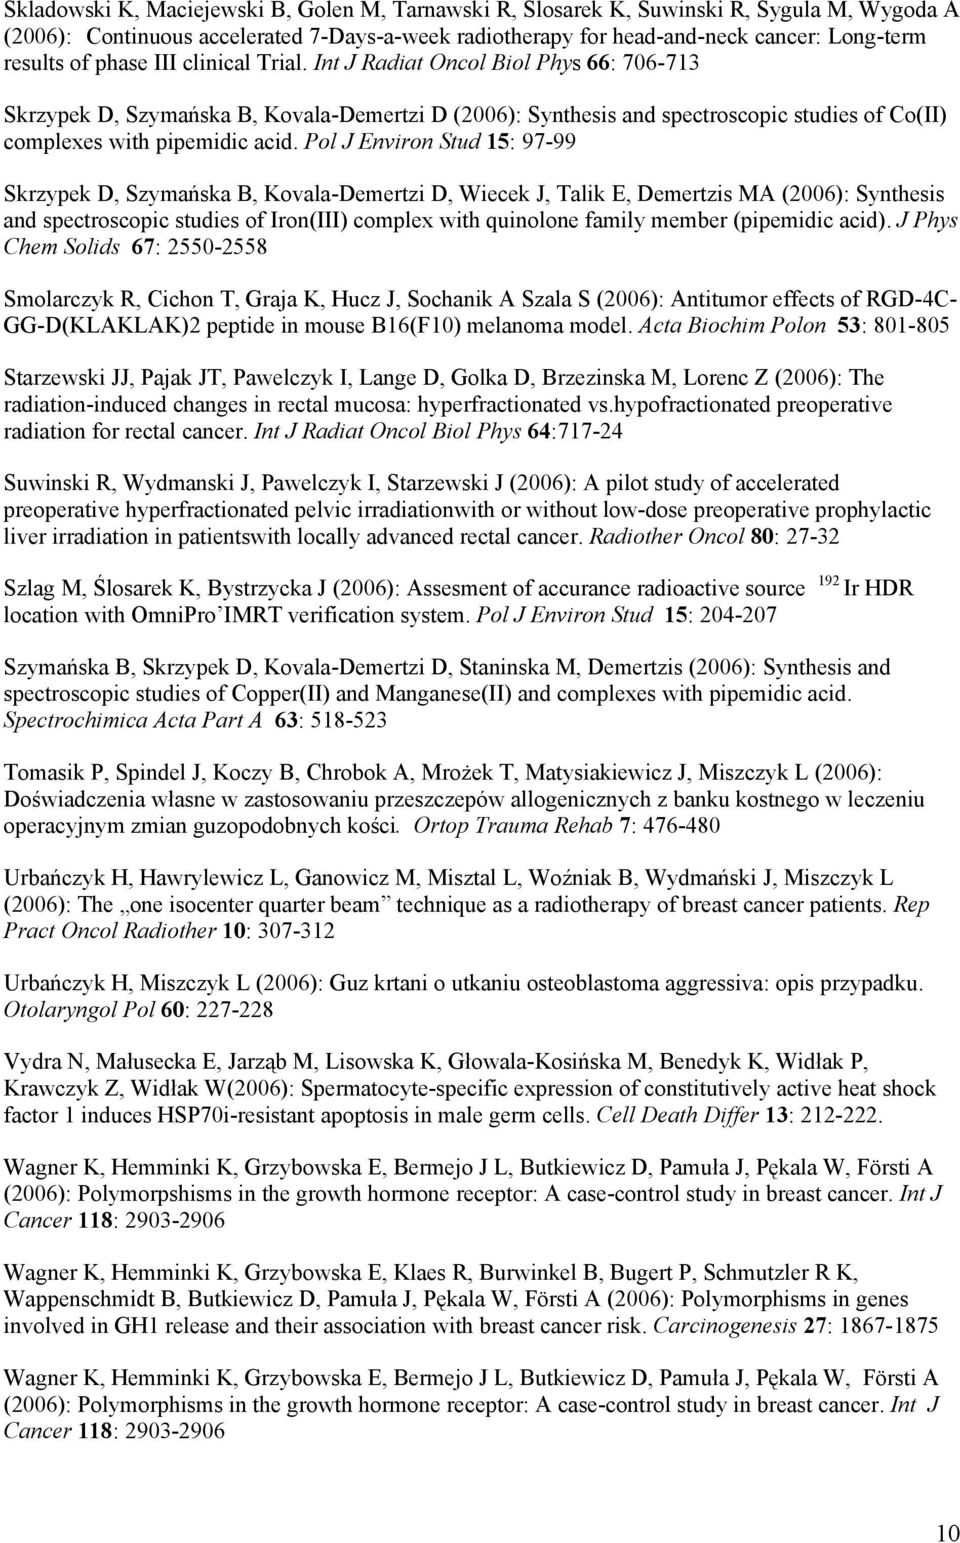 Pol J Environ Stud 15: 97-99 Skrzypek D, Szymańska B, Kovala-Demertzi D, Wiecek J, Talik E, Demertzis MA (2006): Synthesis and spectroscopic studies of Iron(III) complex with quinolone family member